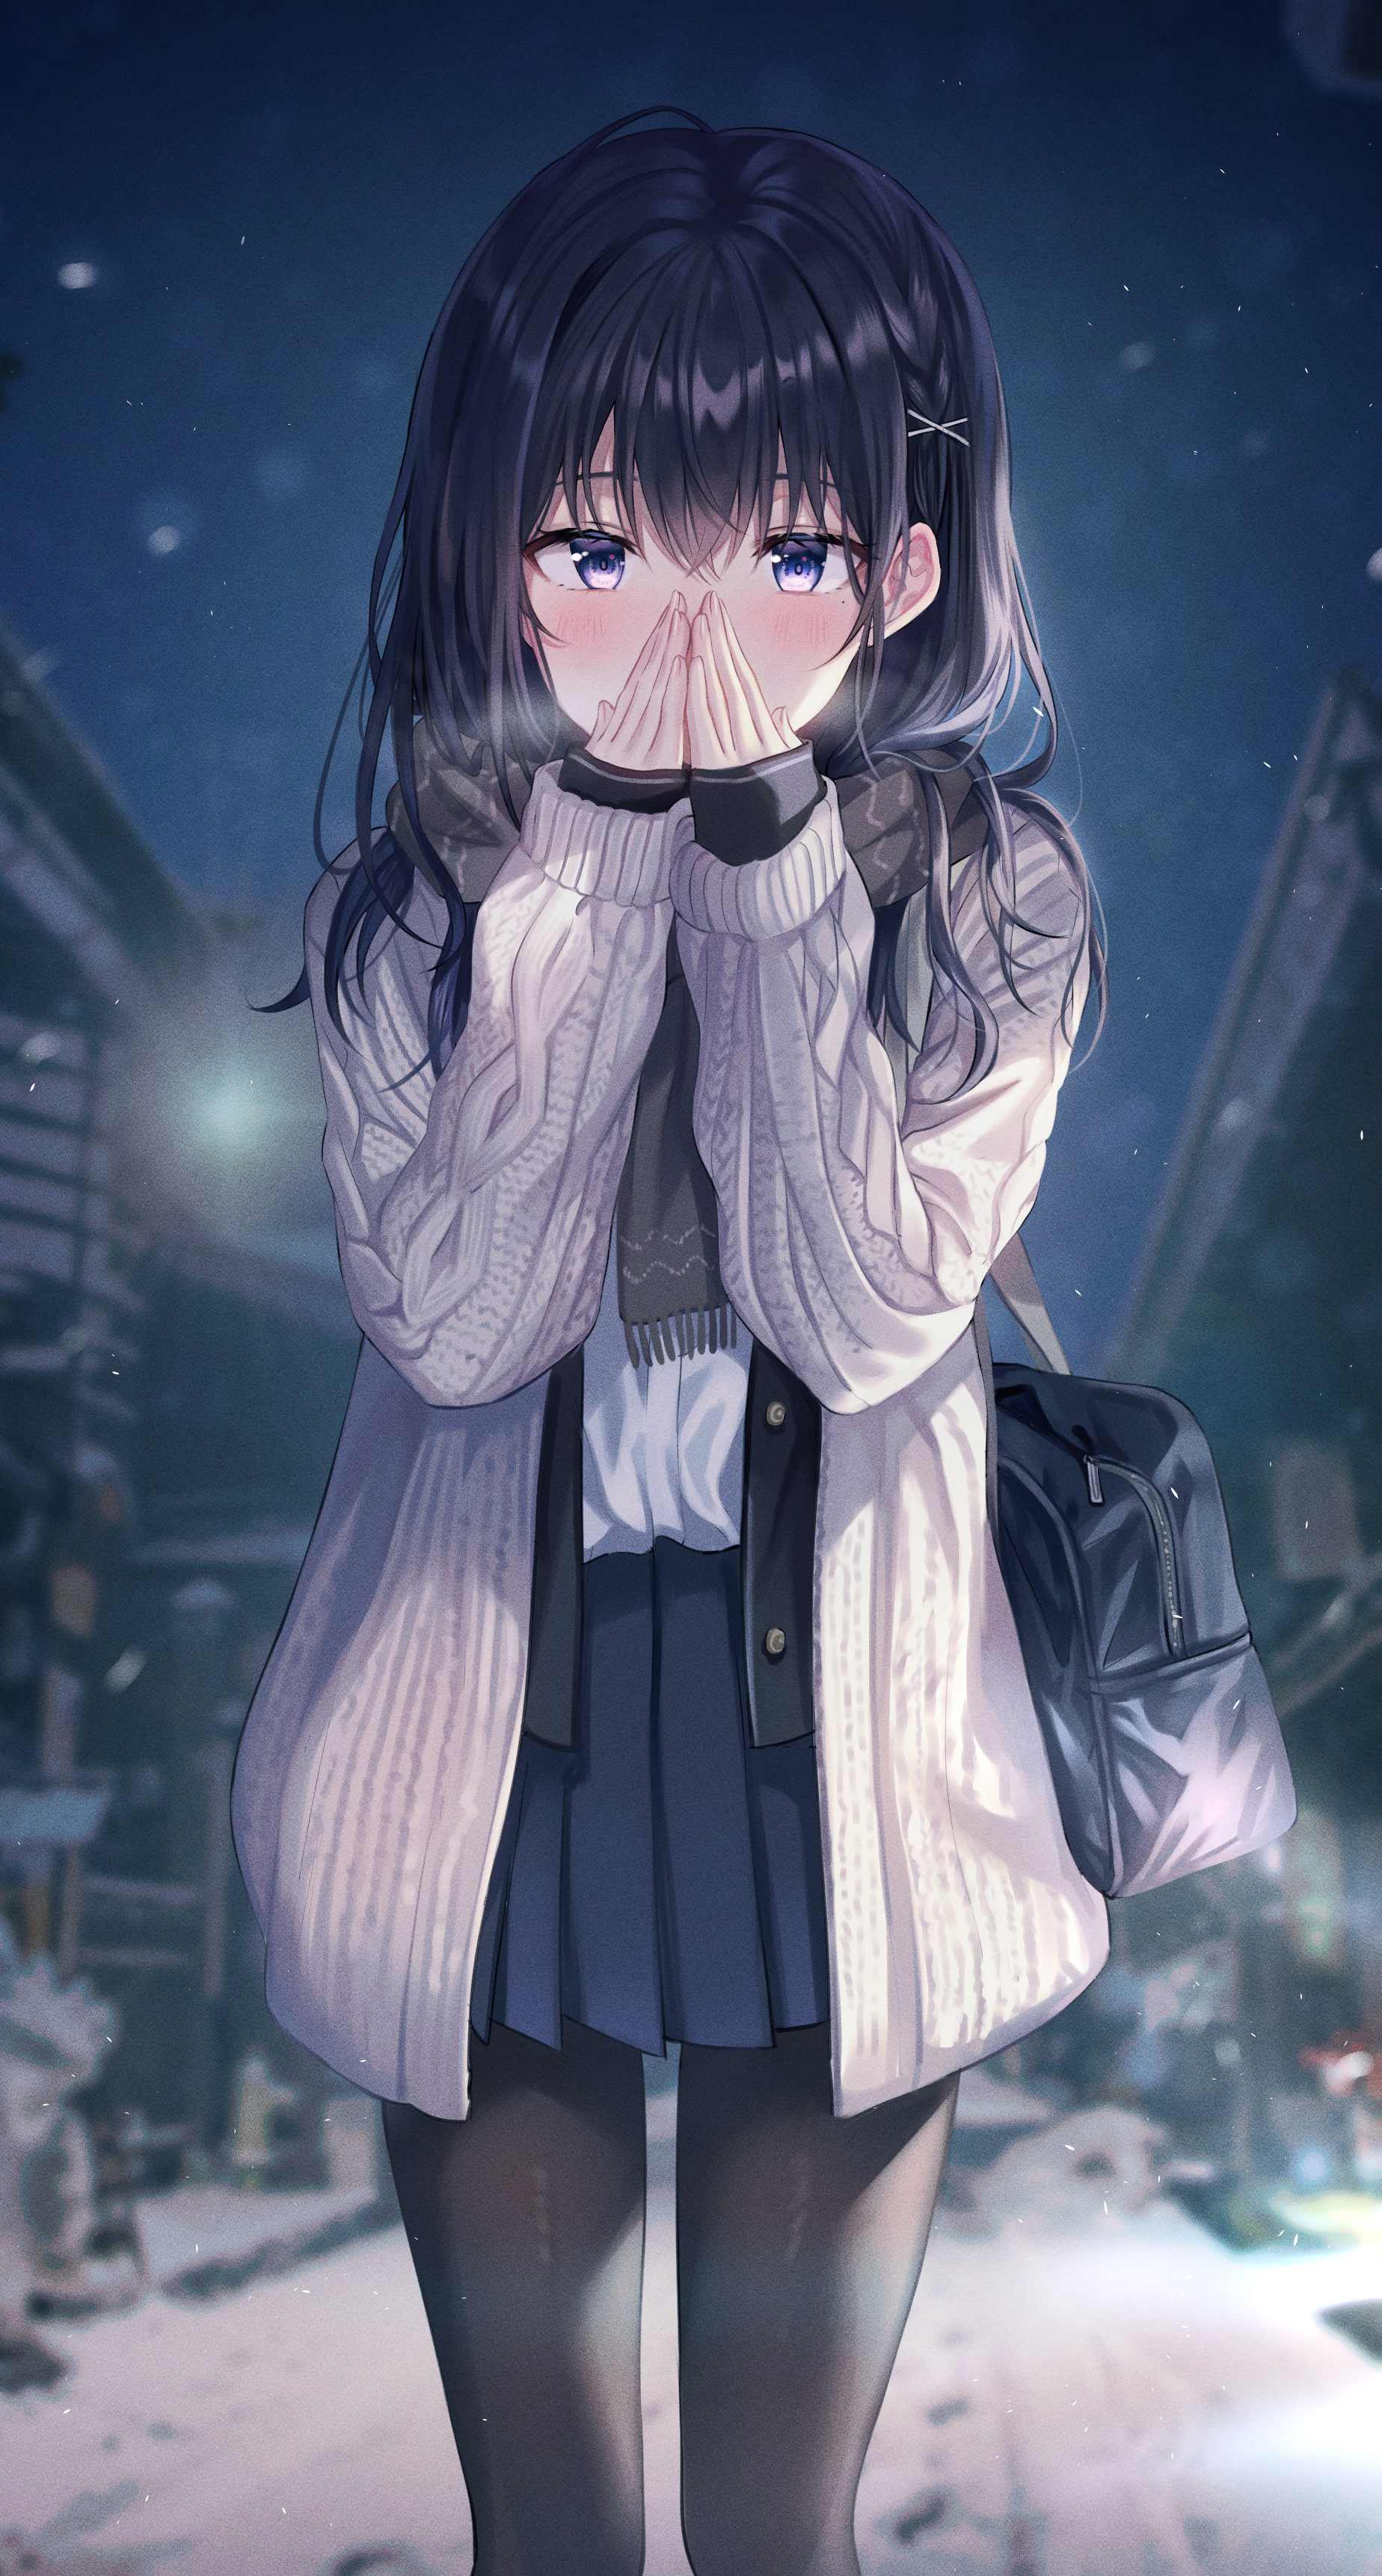 Anime Anime Girls Tokkyu Artista Dark Hair Blue Eyes Blushing School Uniform Sweater Night Winter Sc 1848x3445